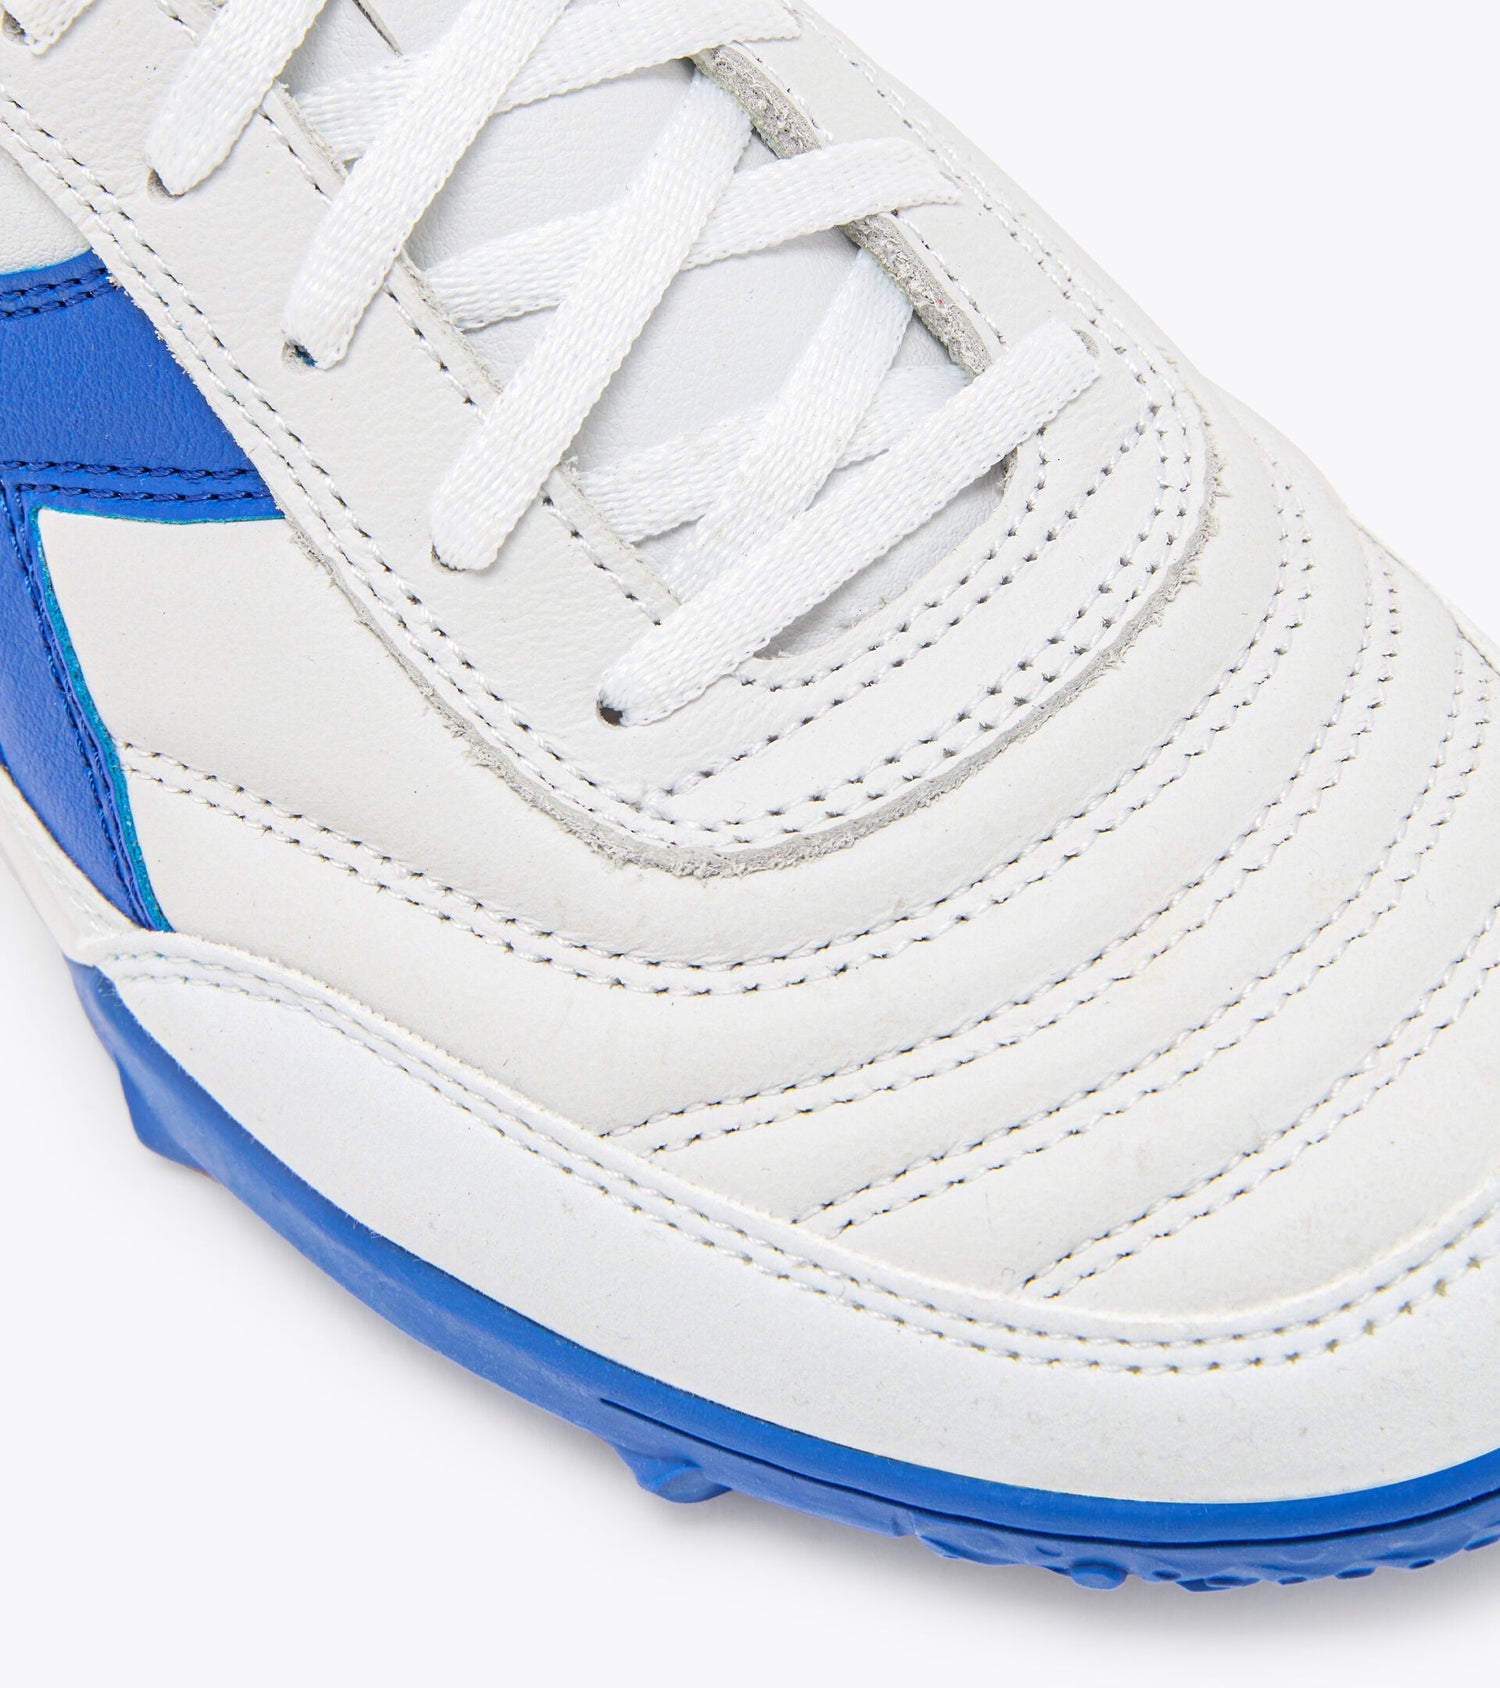 Diadora Calcetto II LT Turf Soccer Shoe - White/Royal Blue